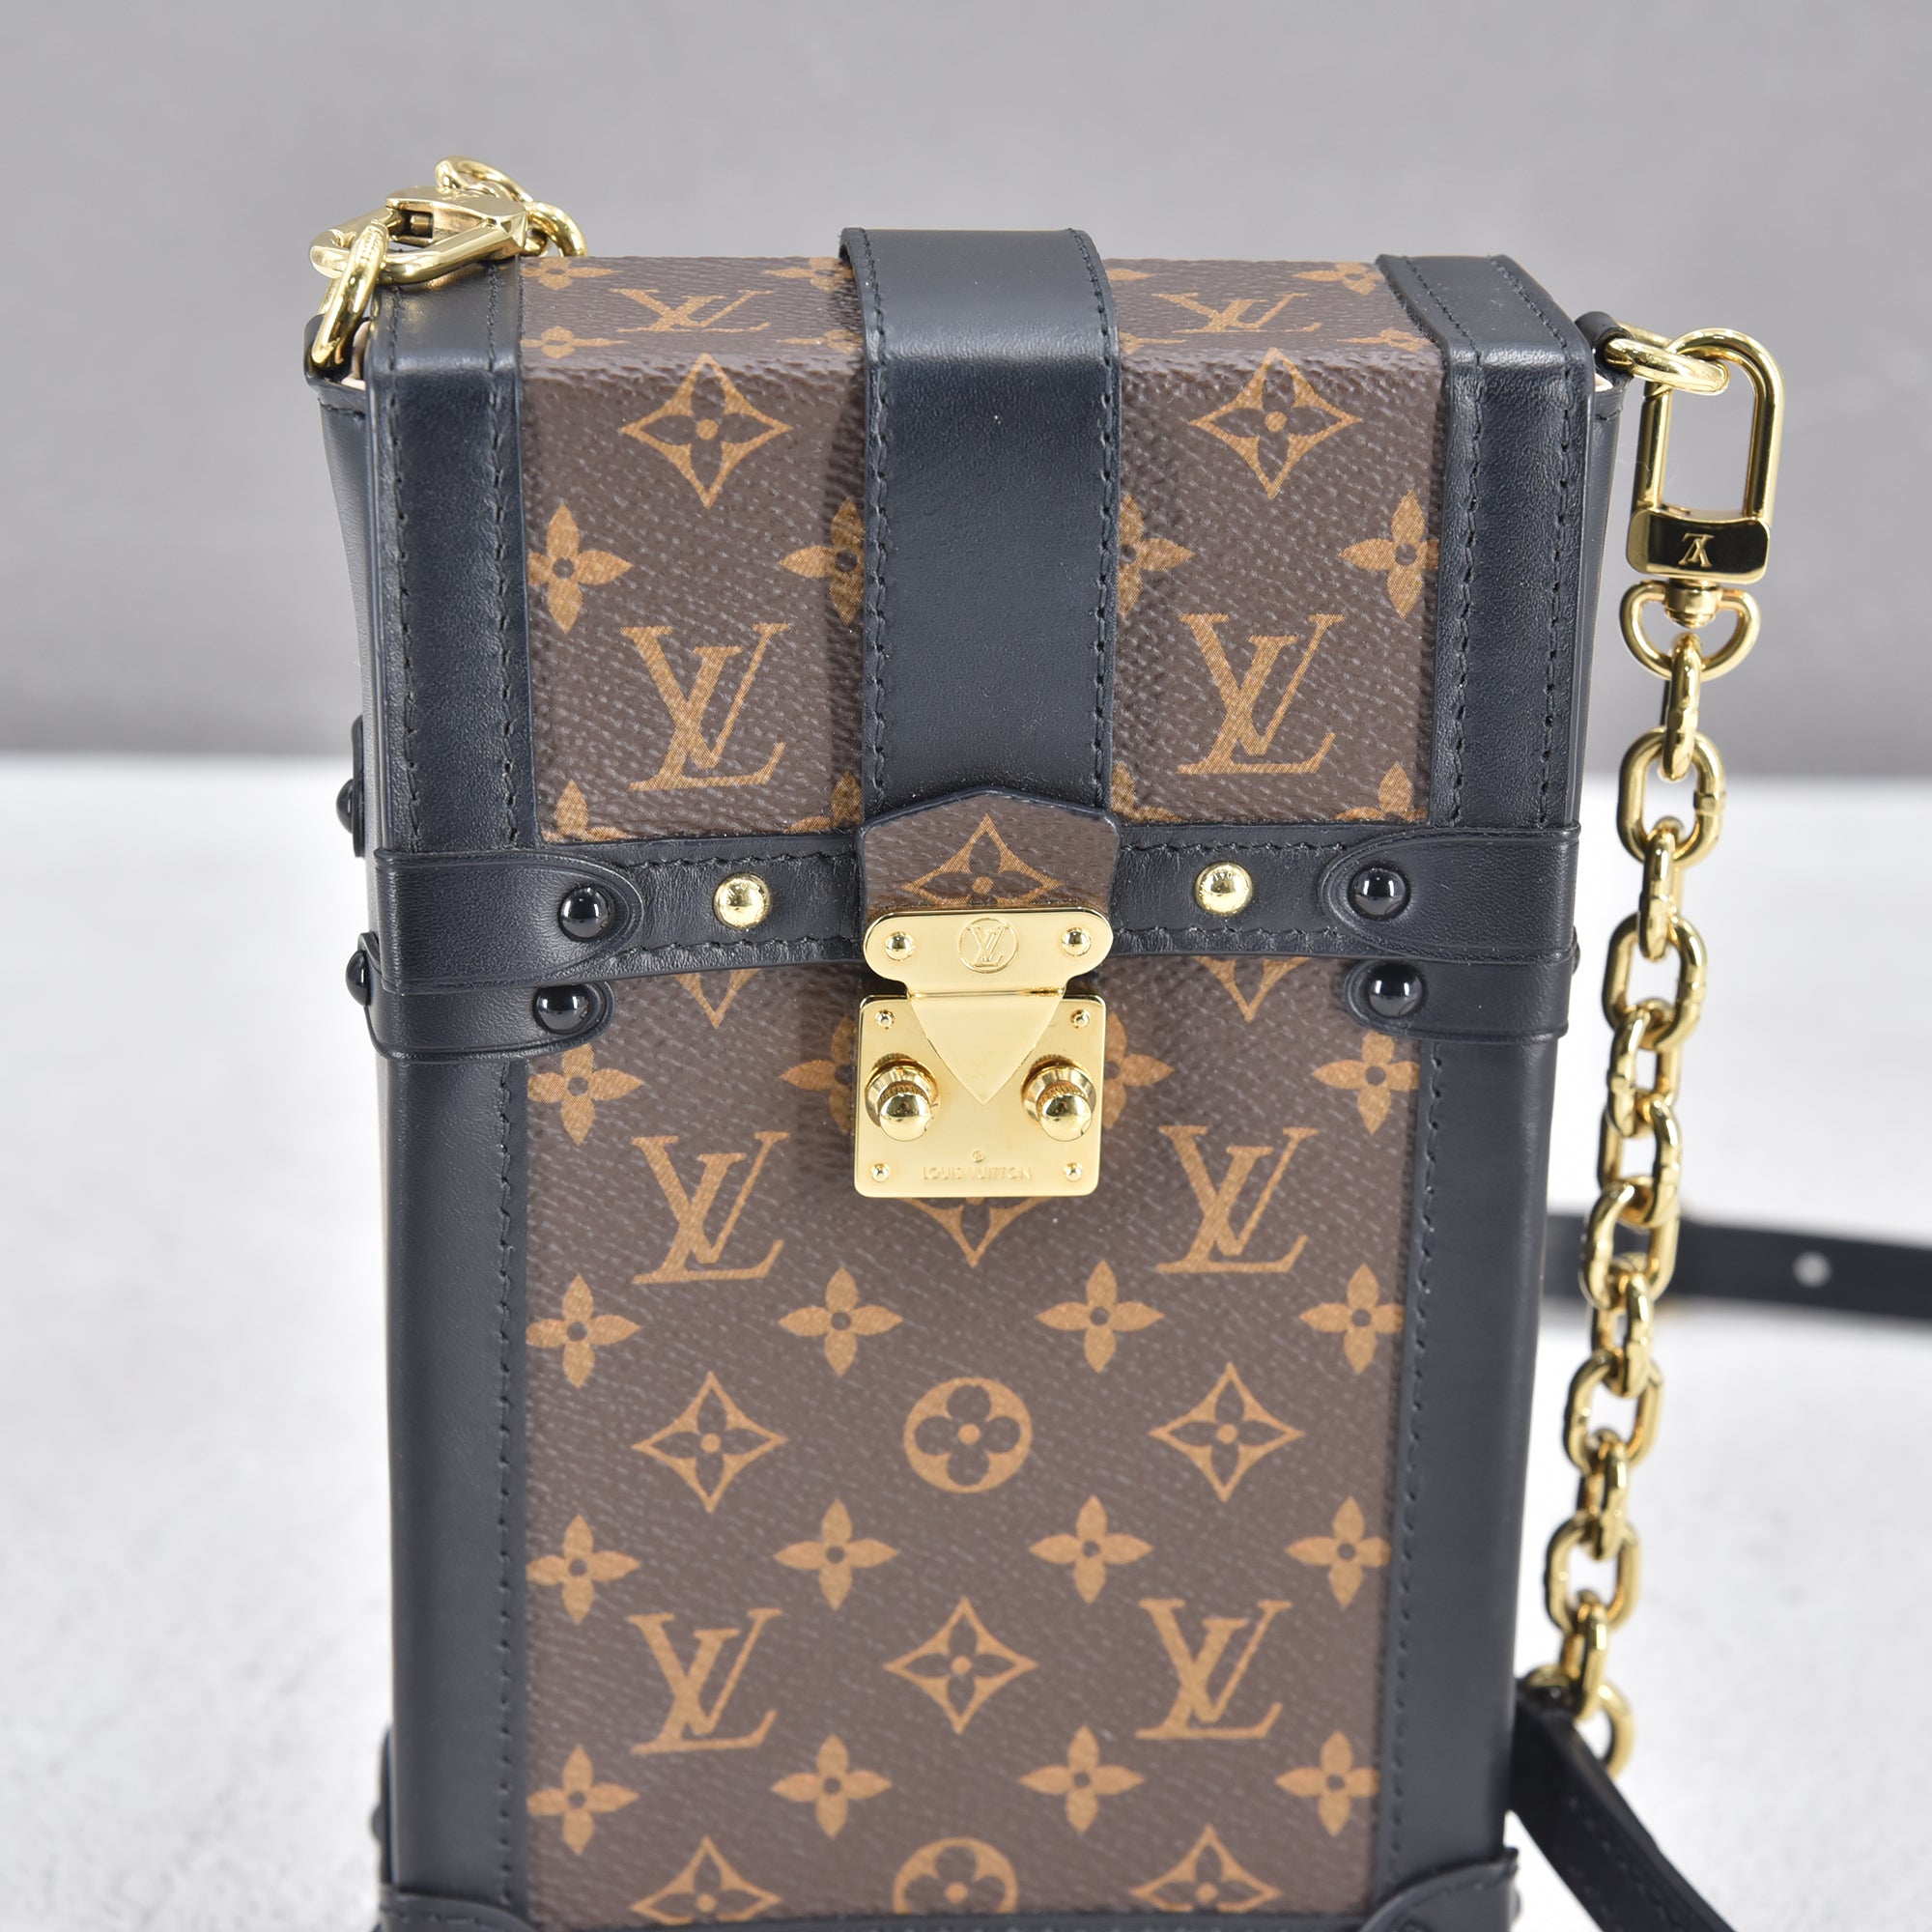 Louis Vuitton Vertical trunk pochette (M63913)